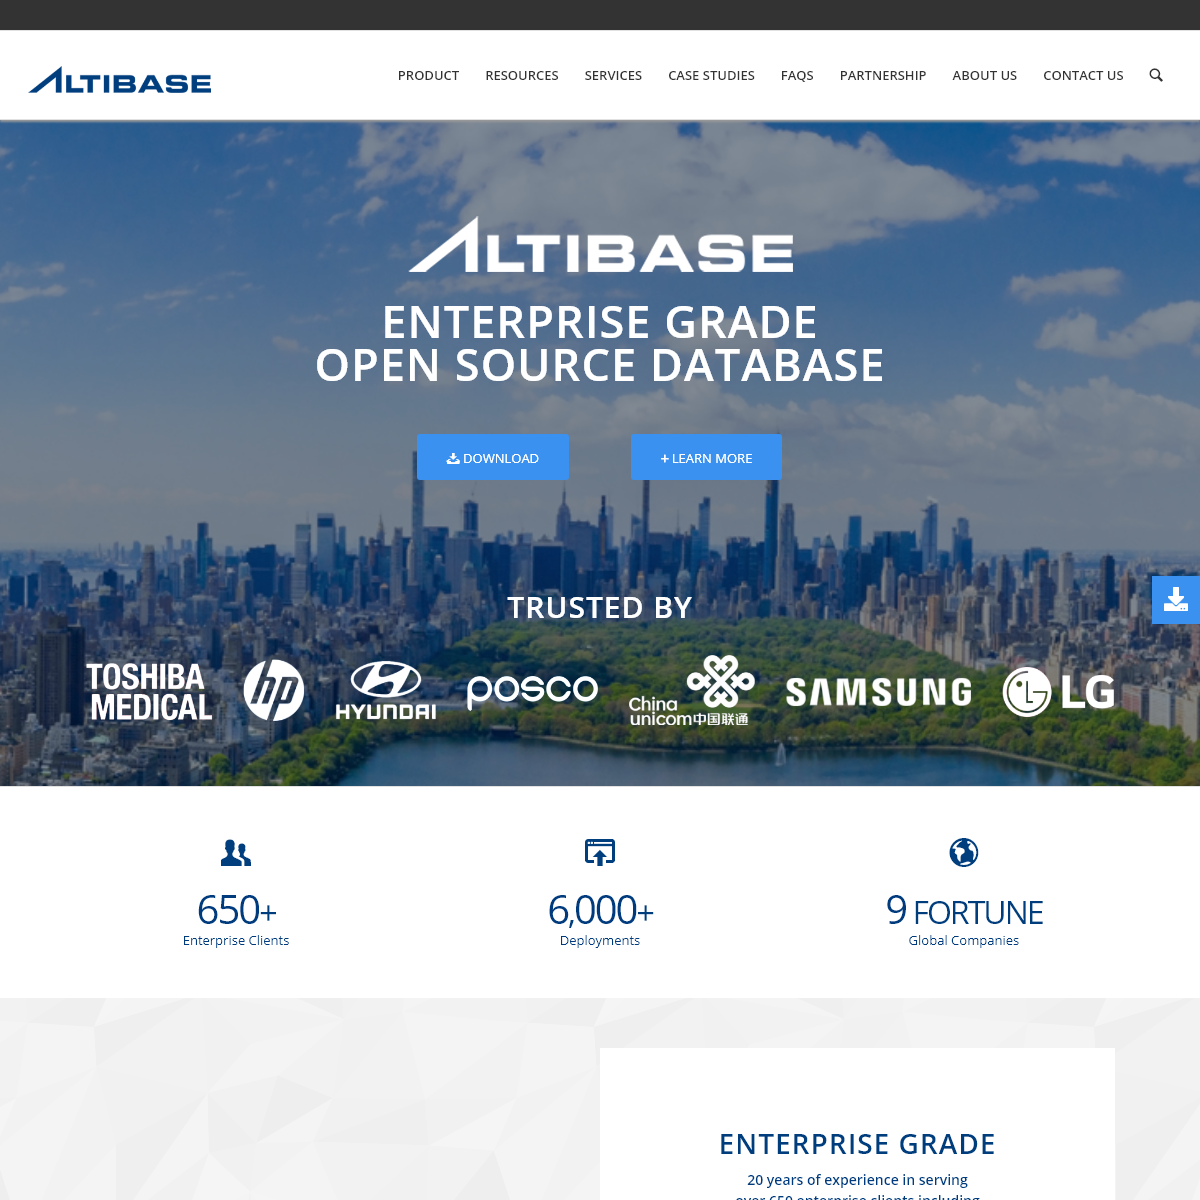 A complete backup of altibase.com